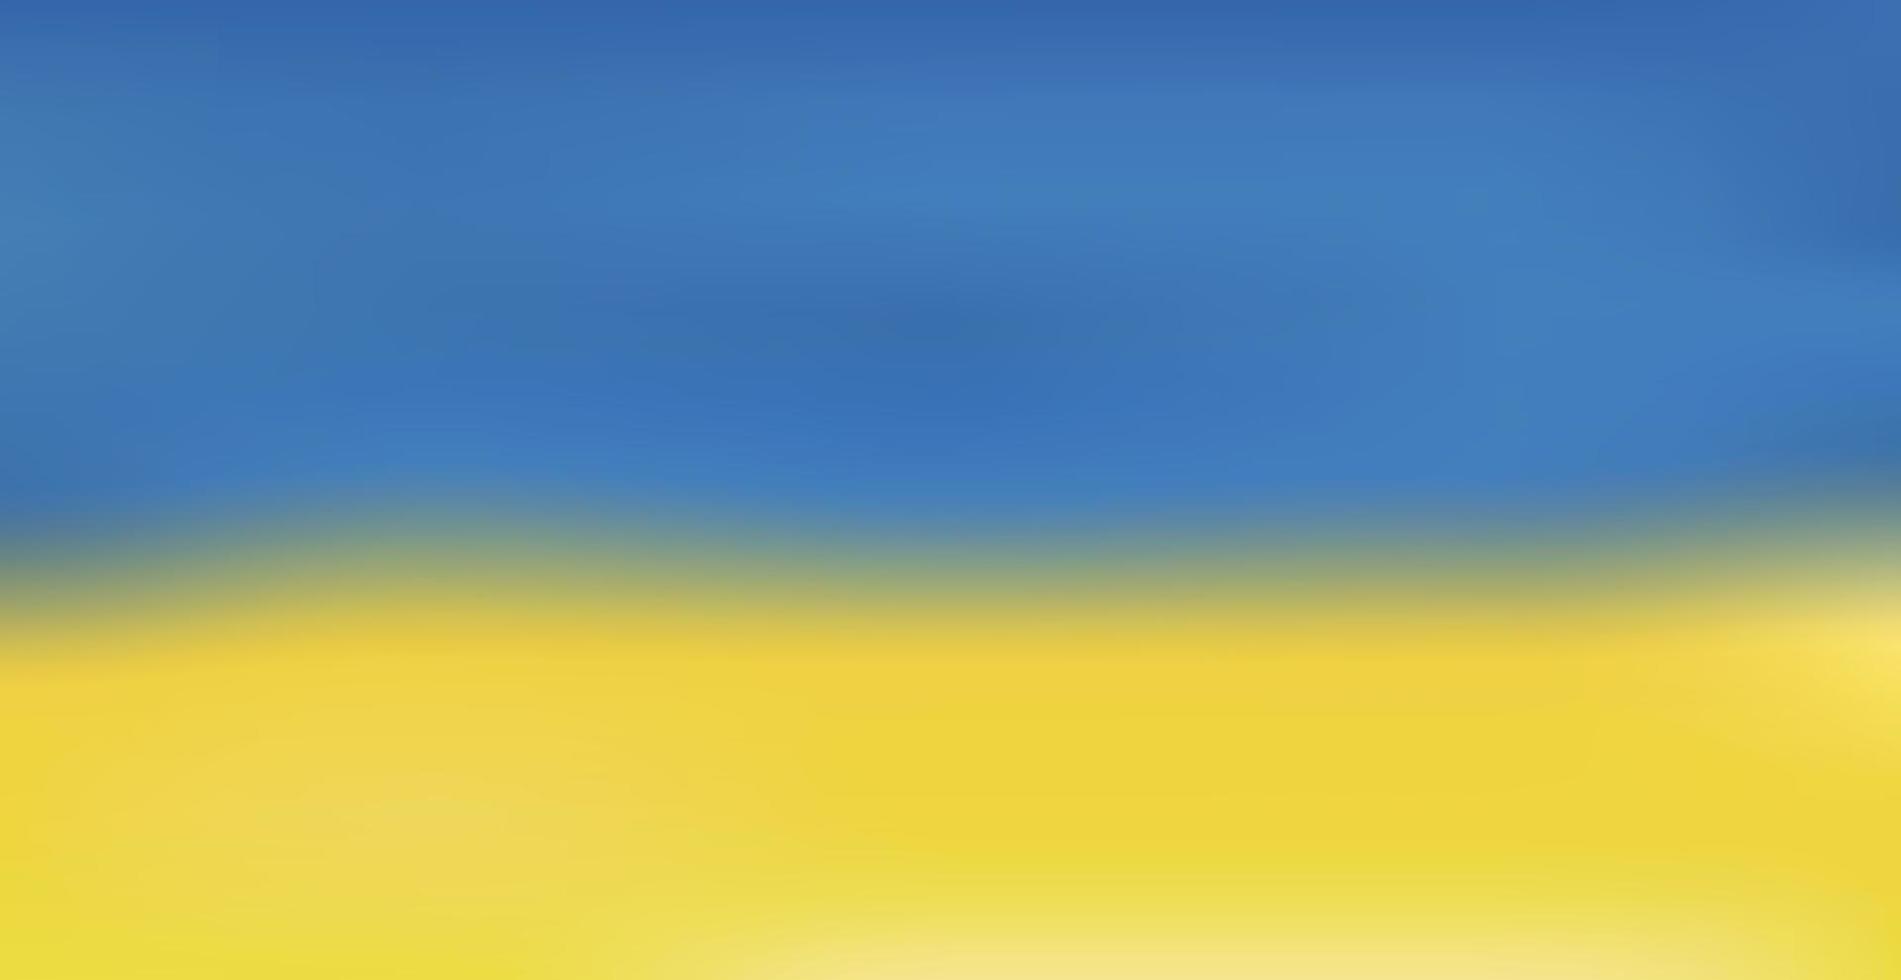 fondo degradado azul-naranja bandera de ucrania - vector